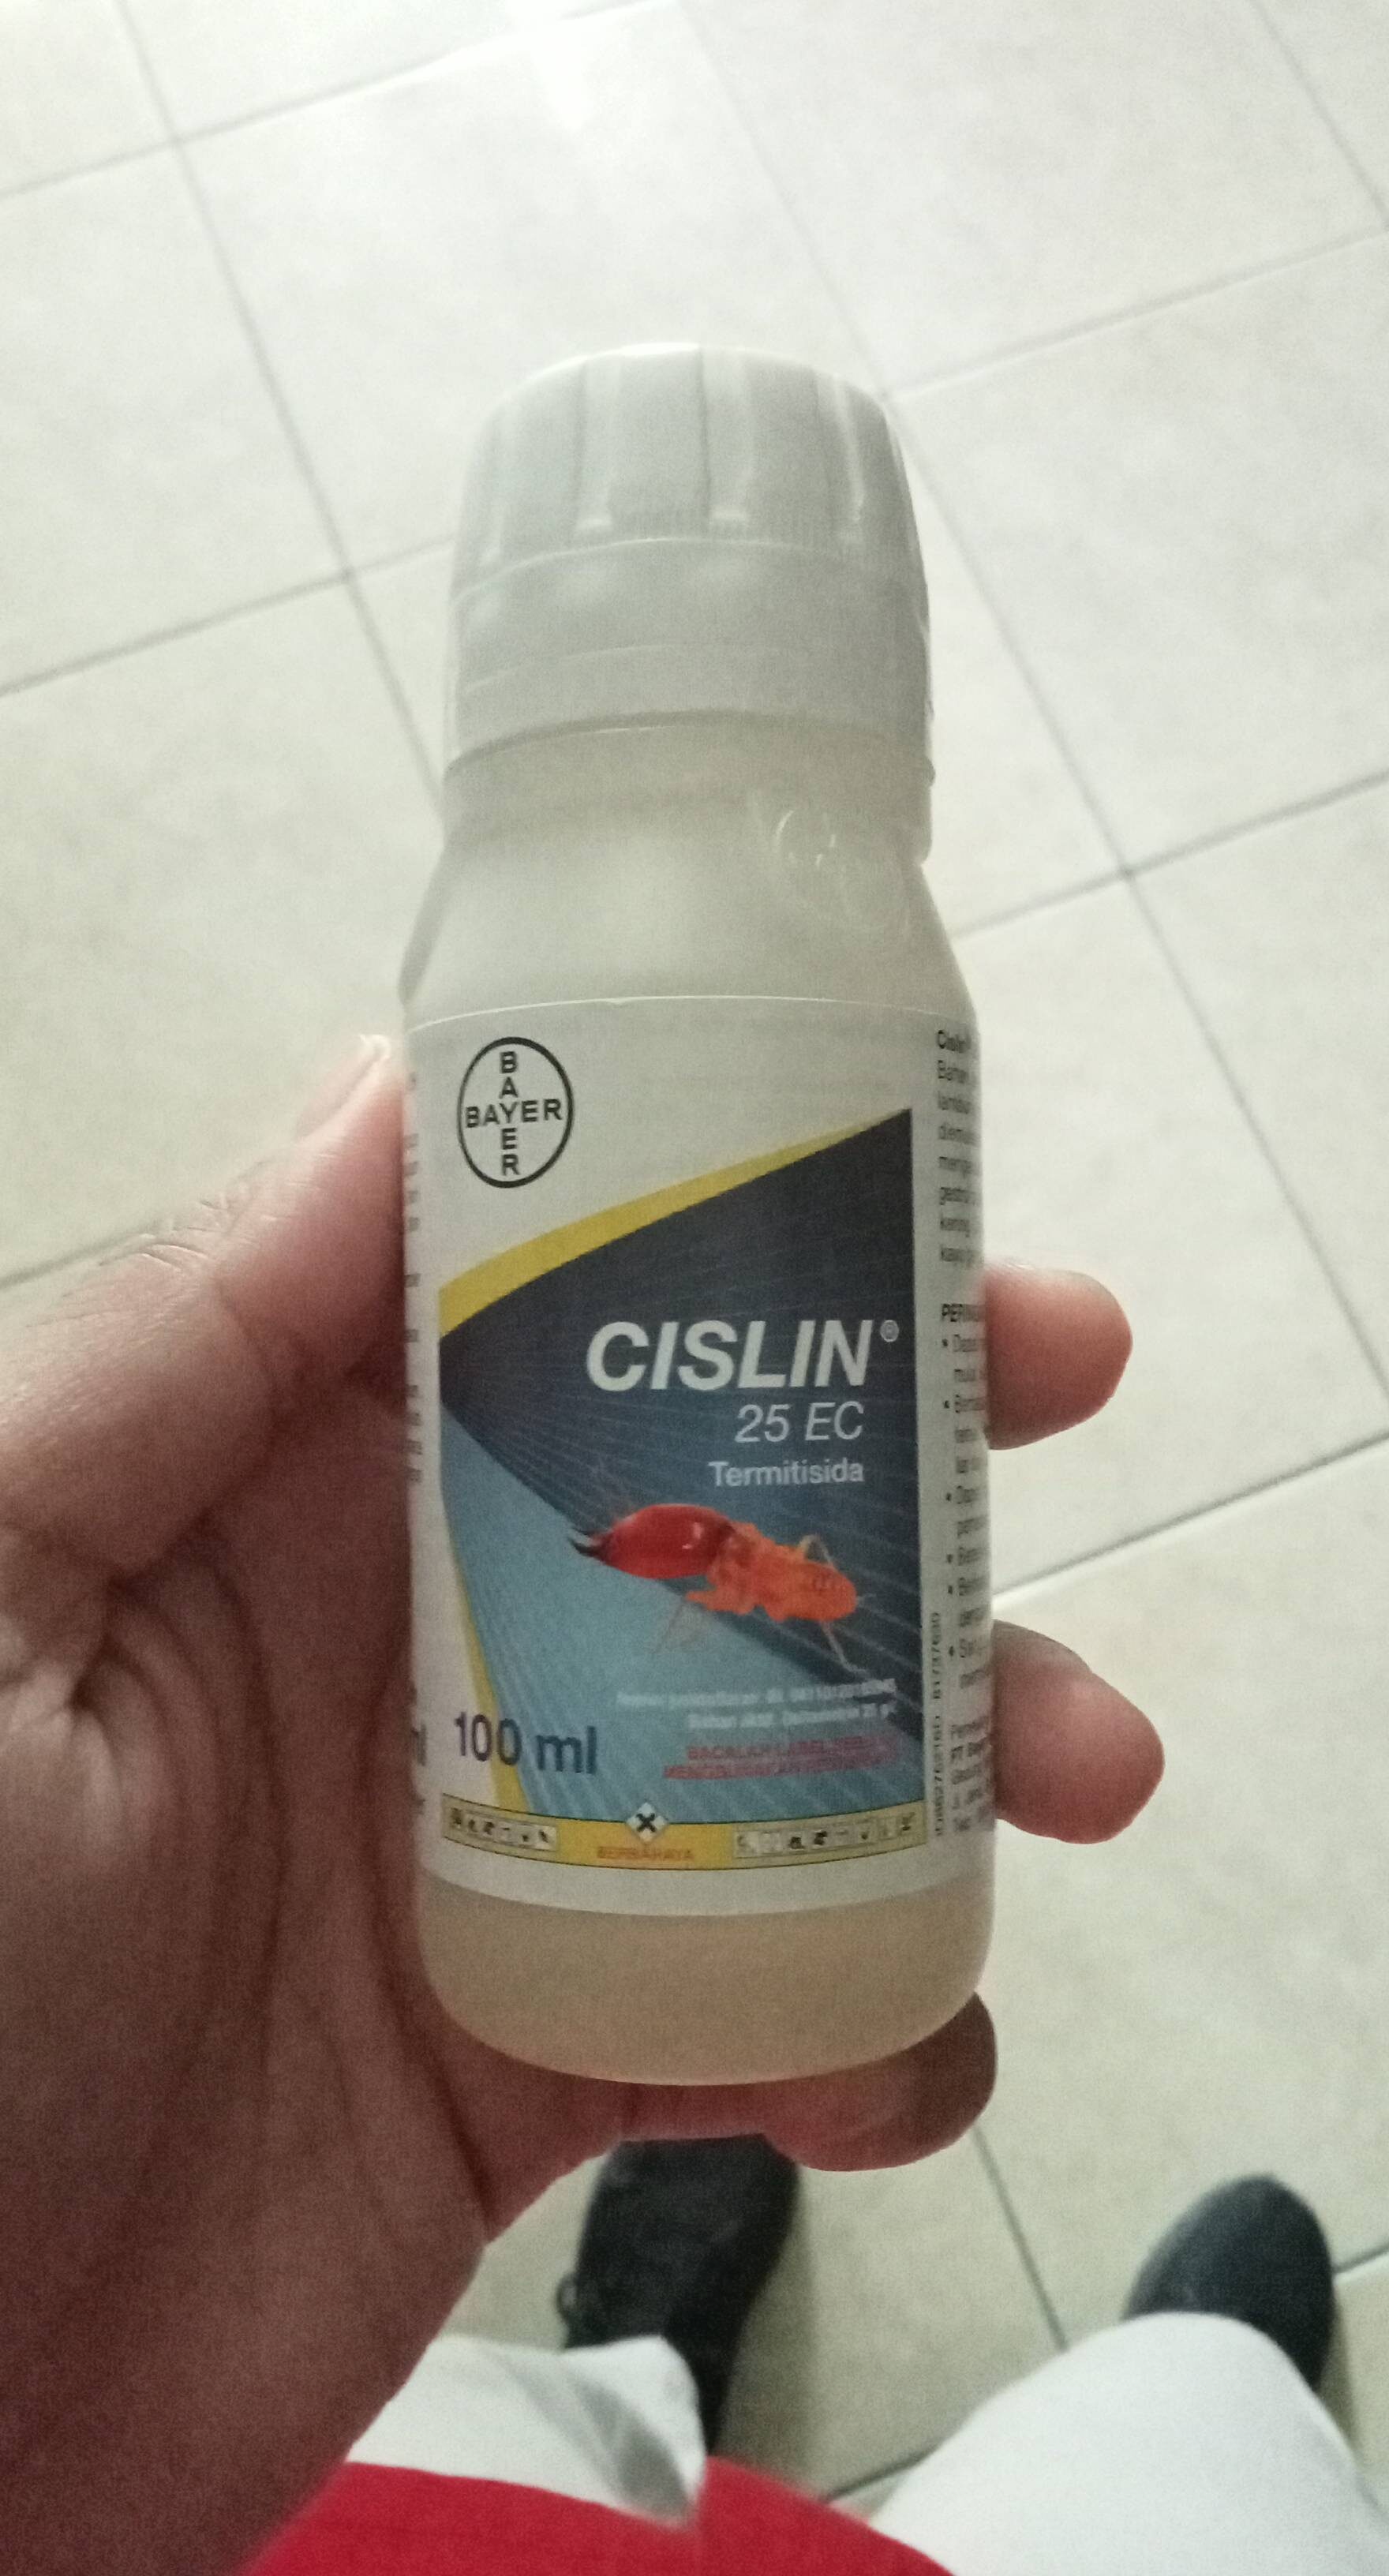 Cislin termitisida - Product - en